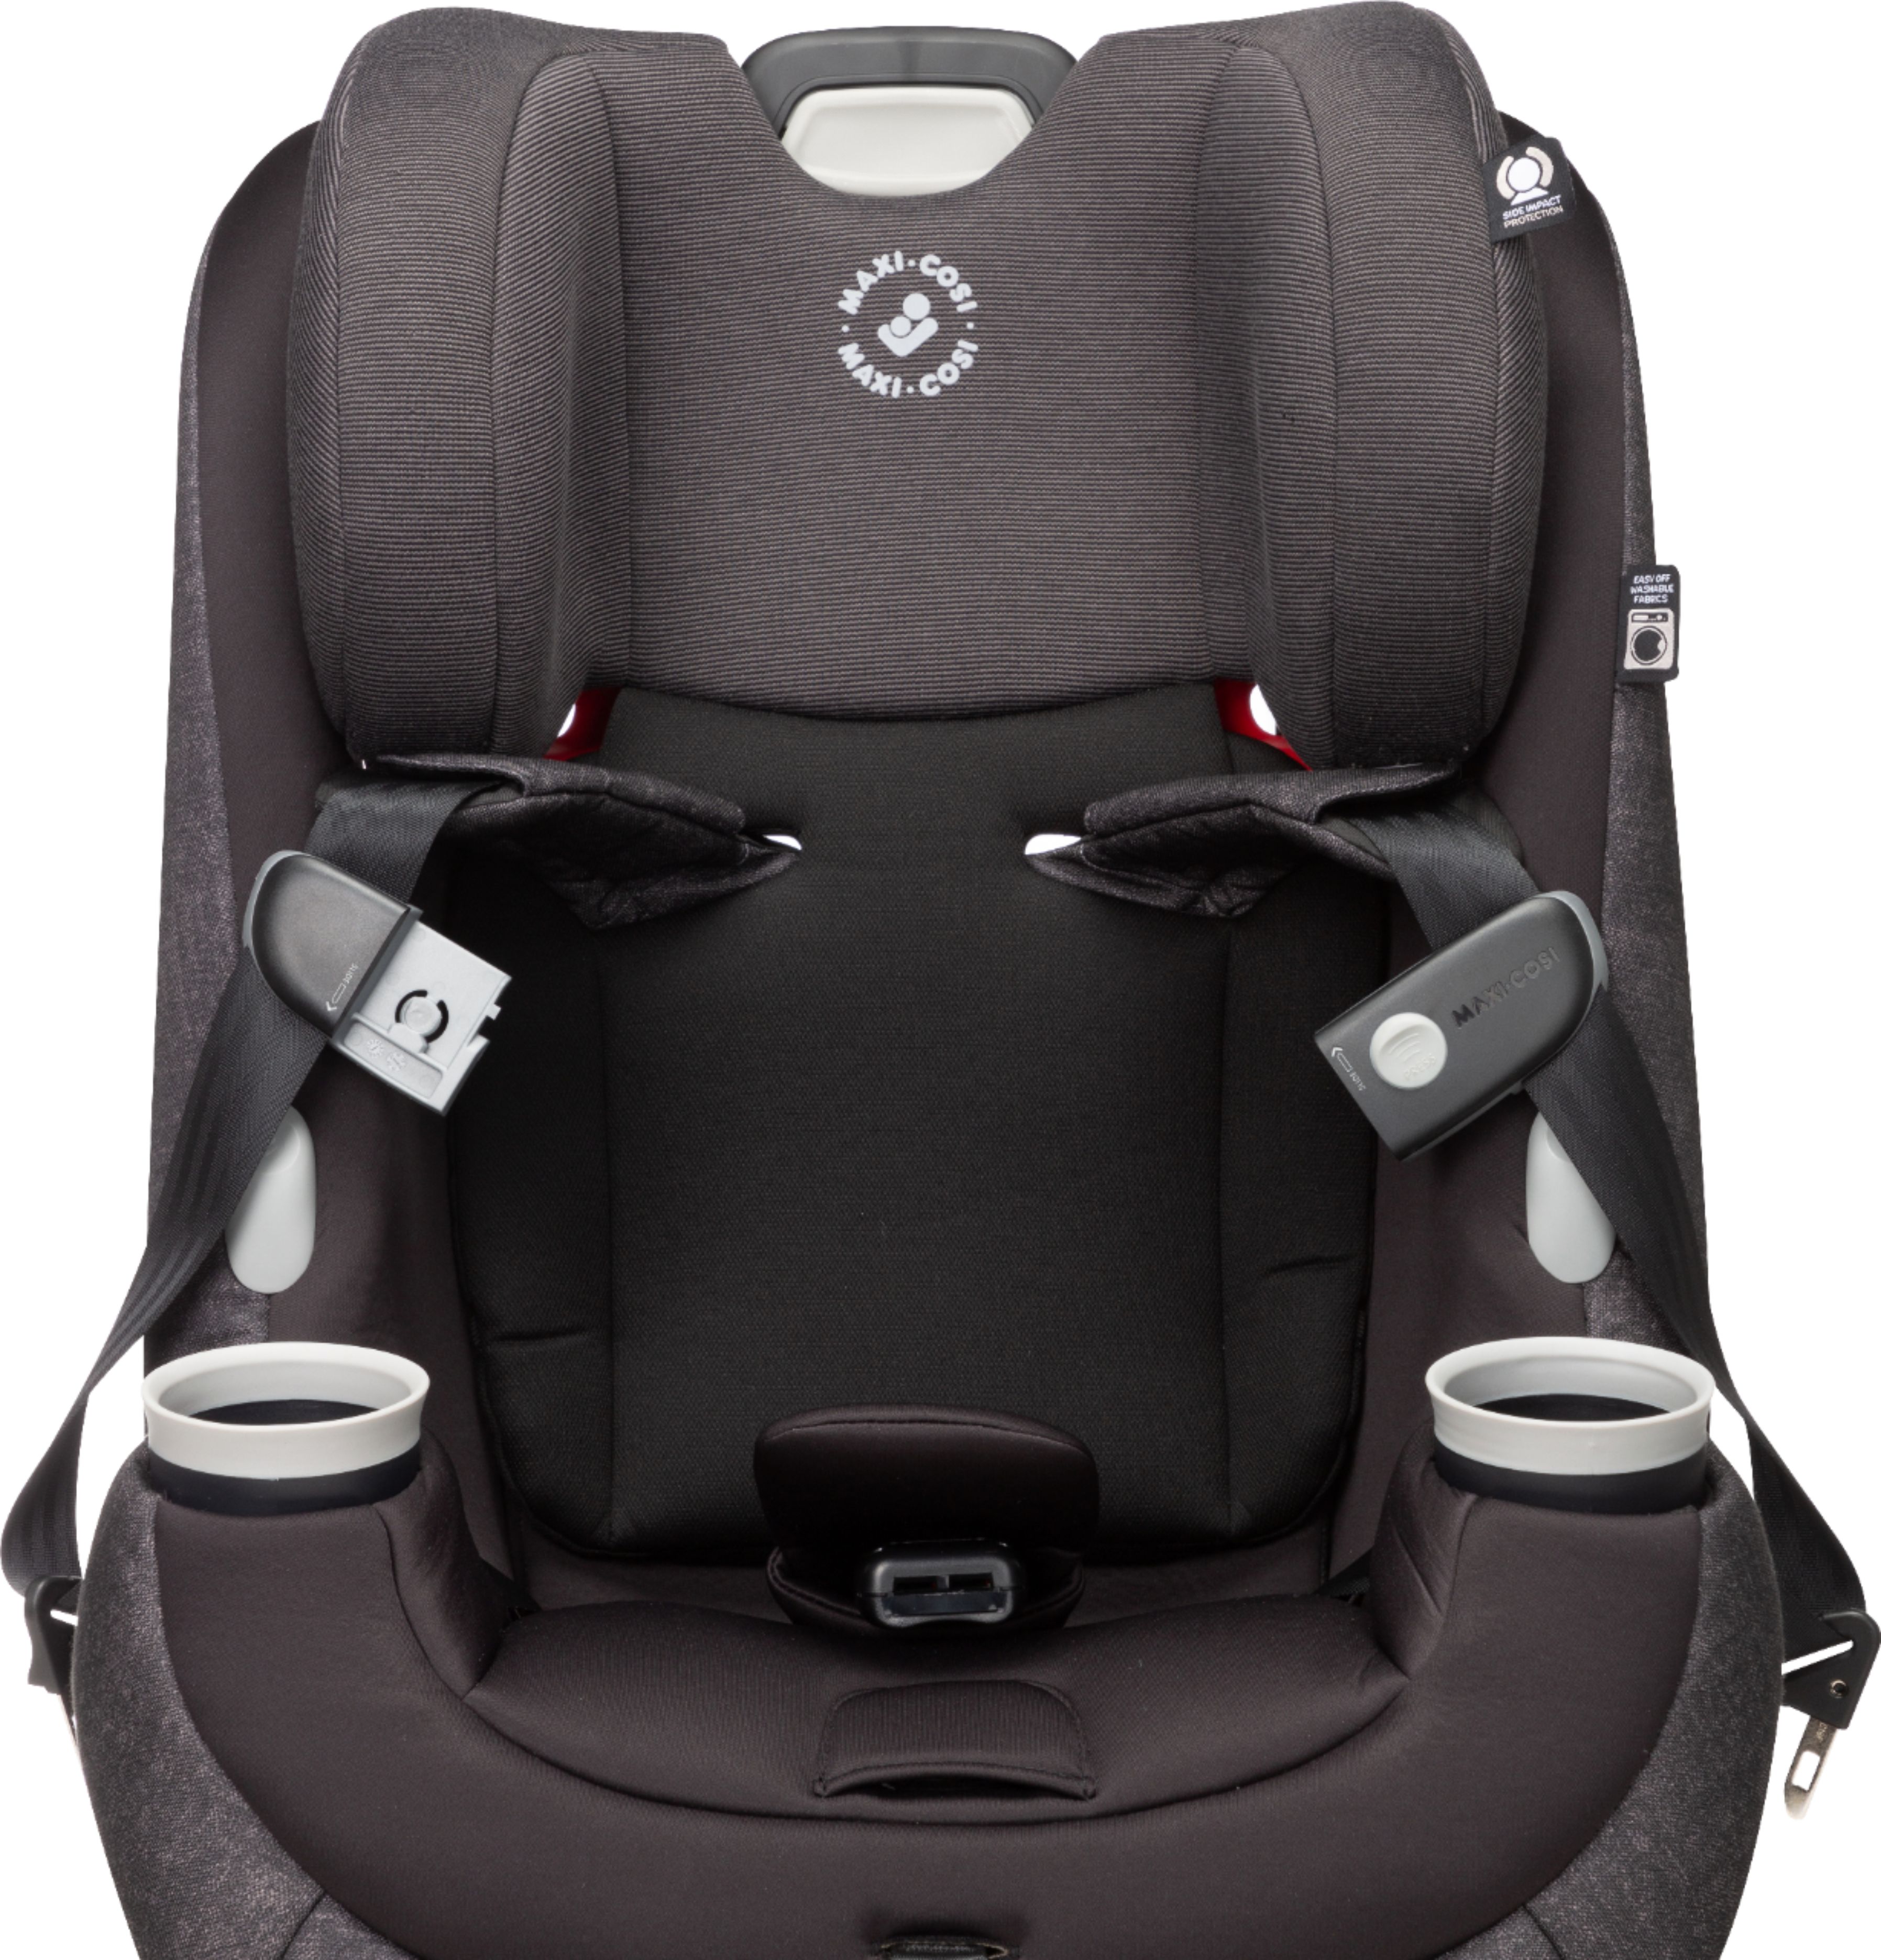 Maxi-Cosi Pria Max All-in-One Convertible Seat Black CC208ETK - Best Buy